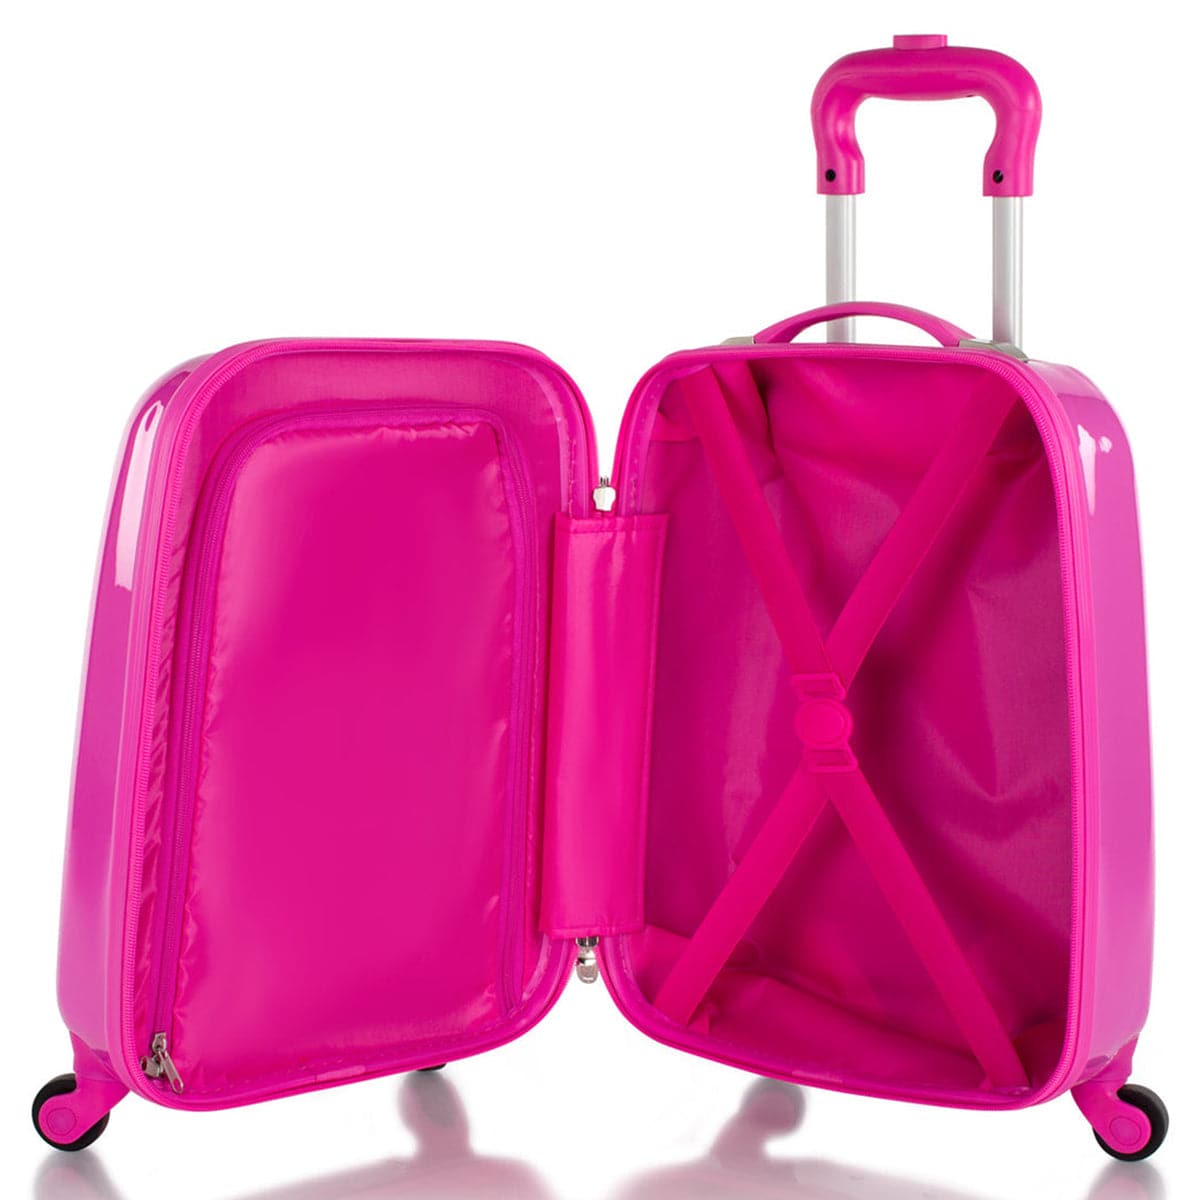 Heys eOne Kids Spinner Luggage